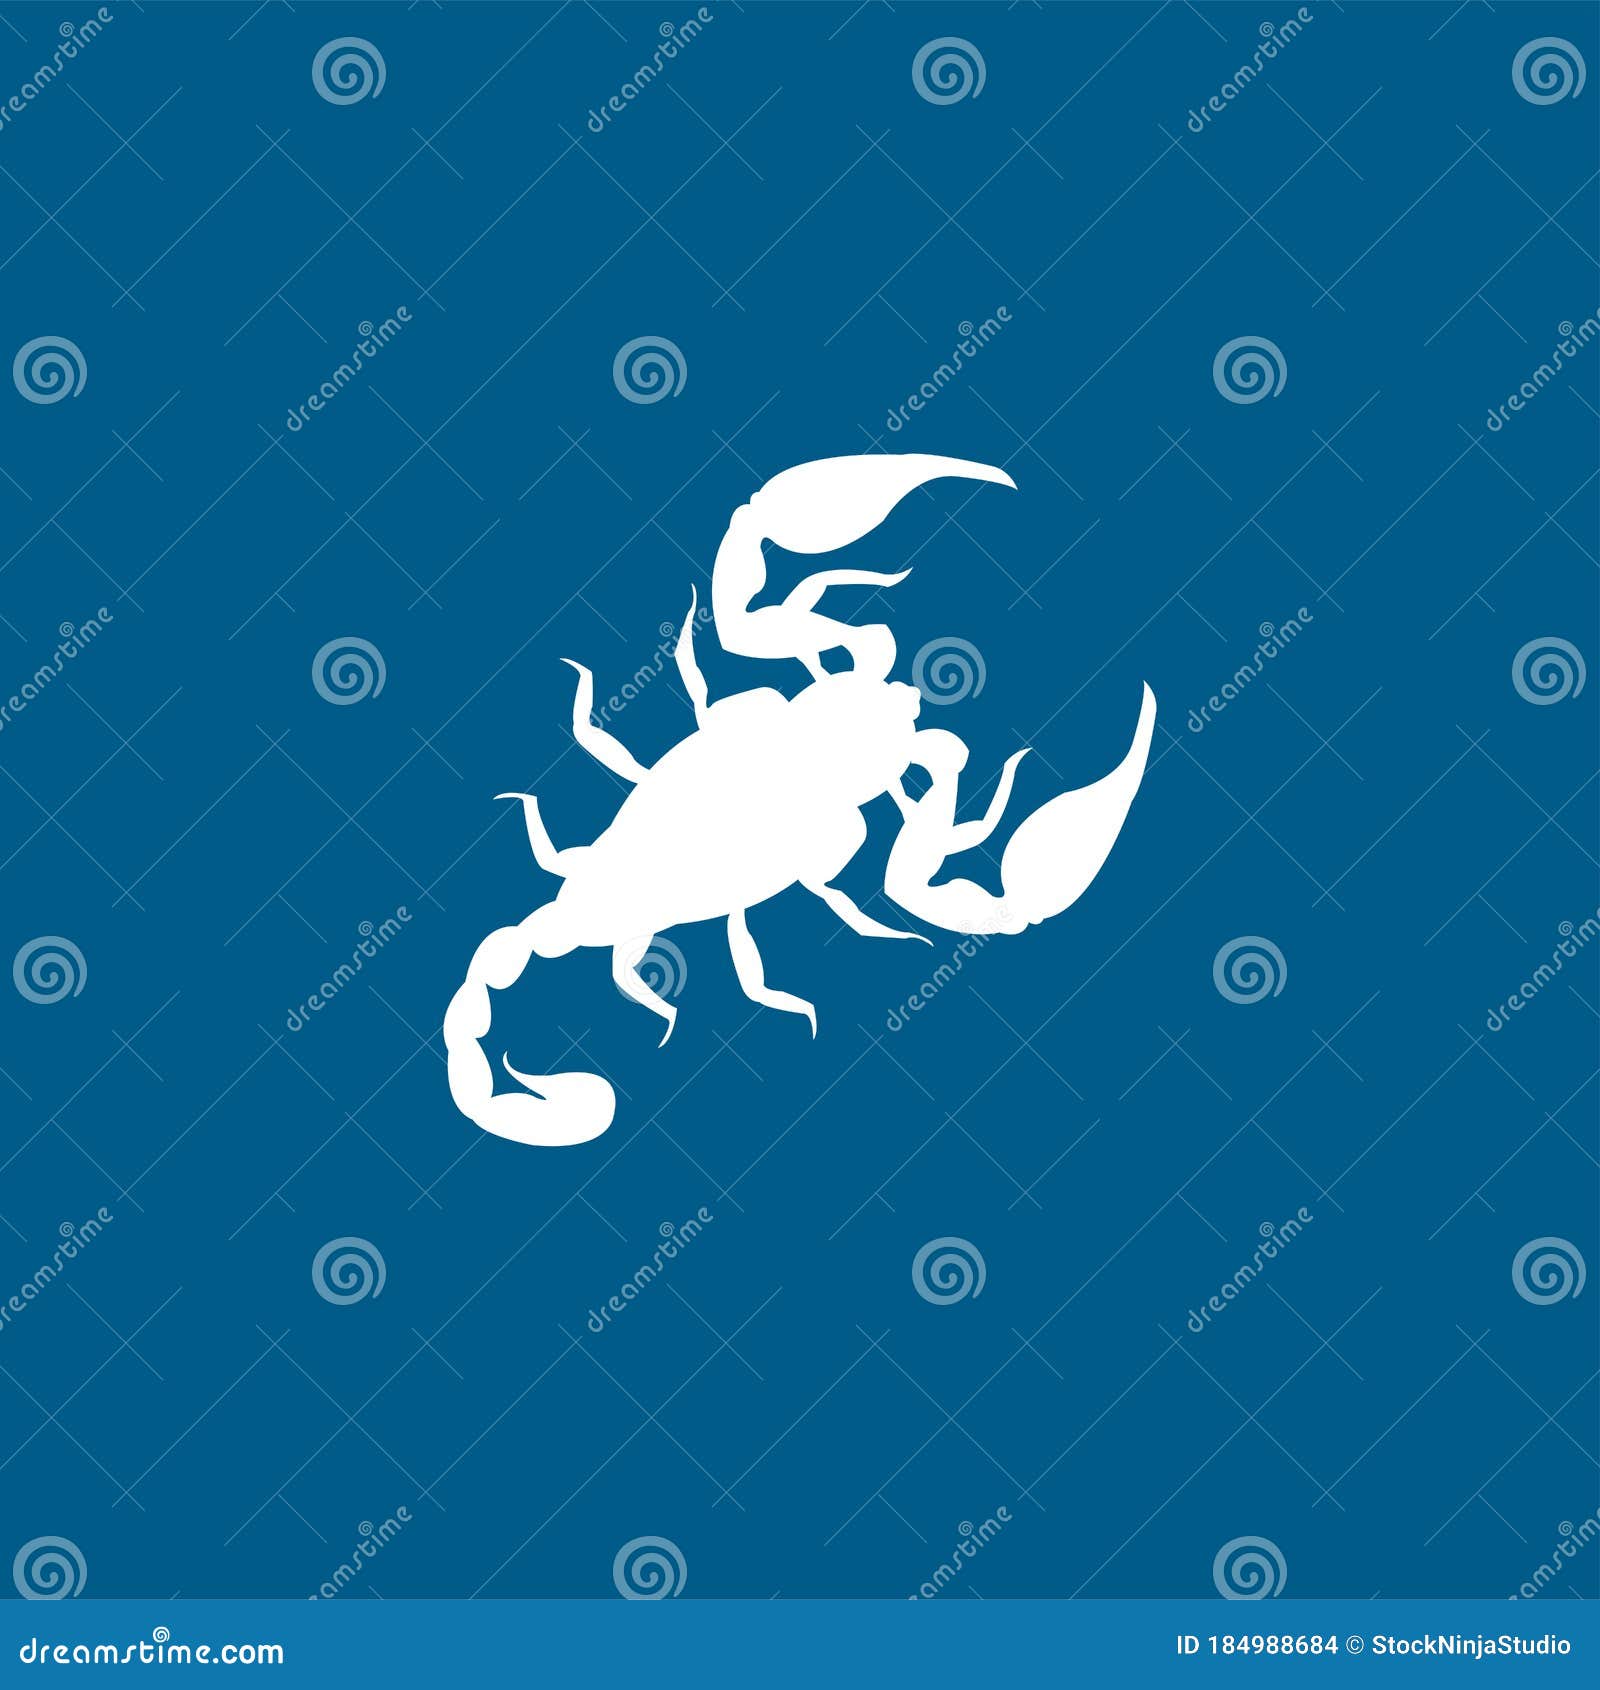 Skorpion Icon on Blue Background. Blue Flat Style Vector Illustration ...